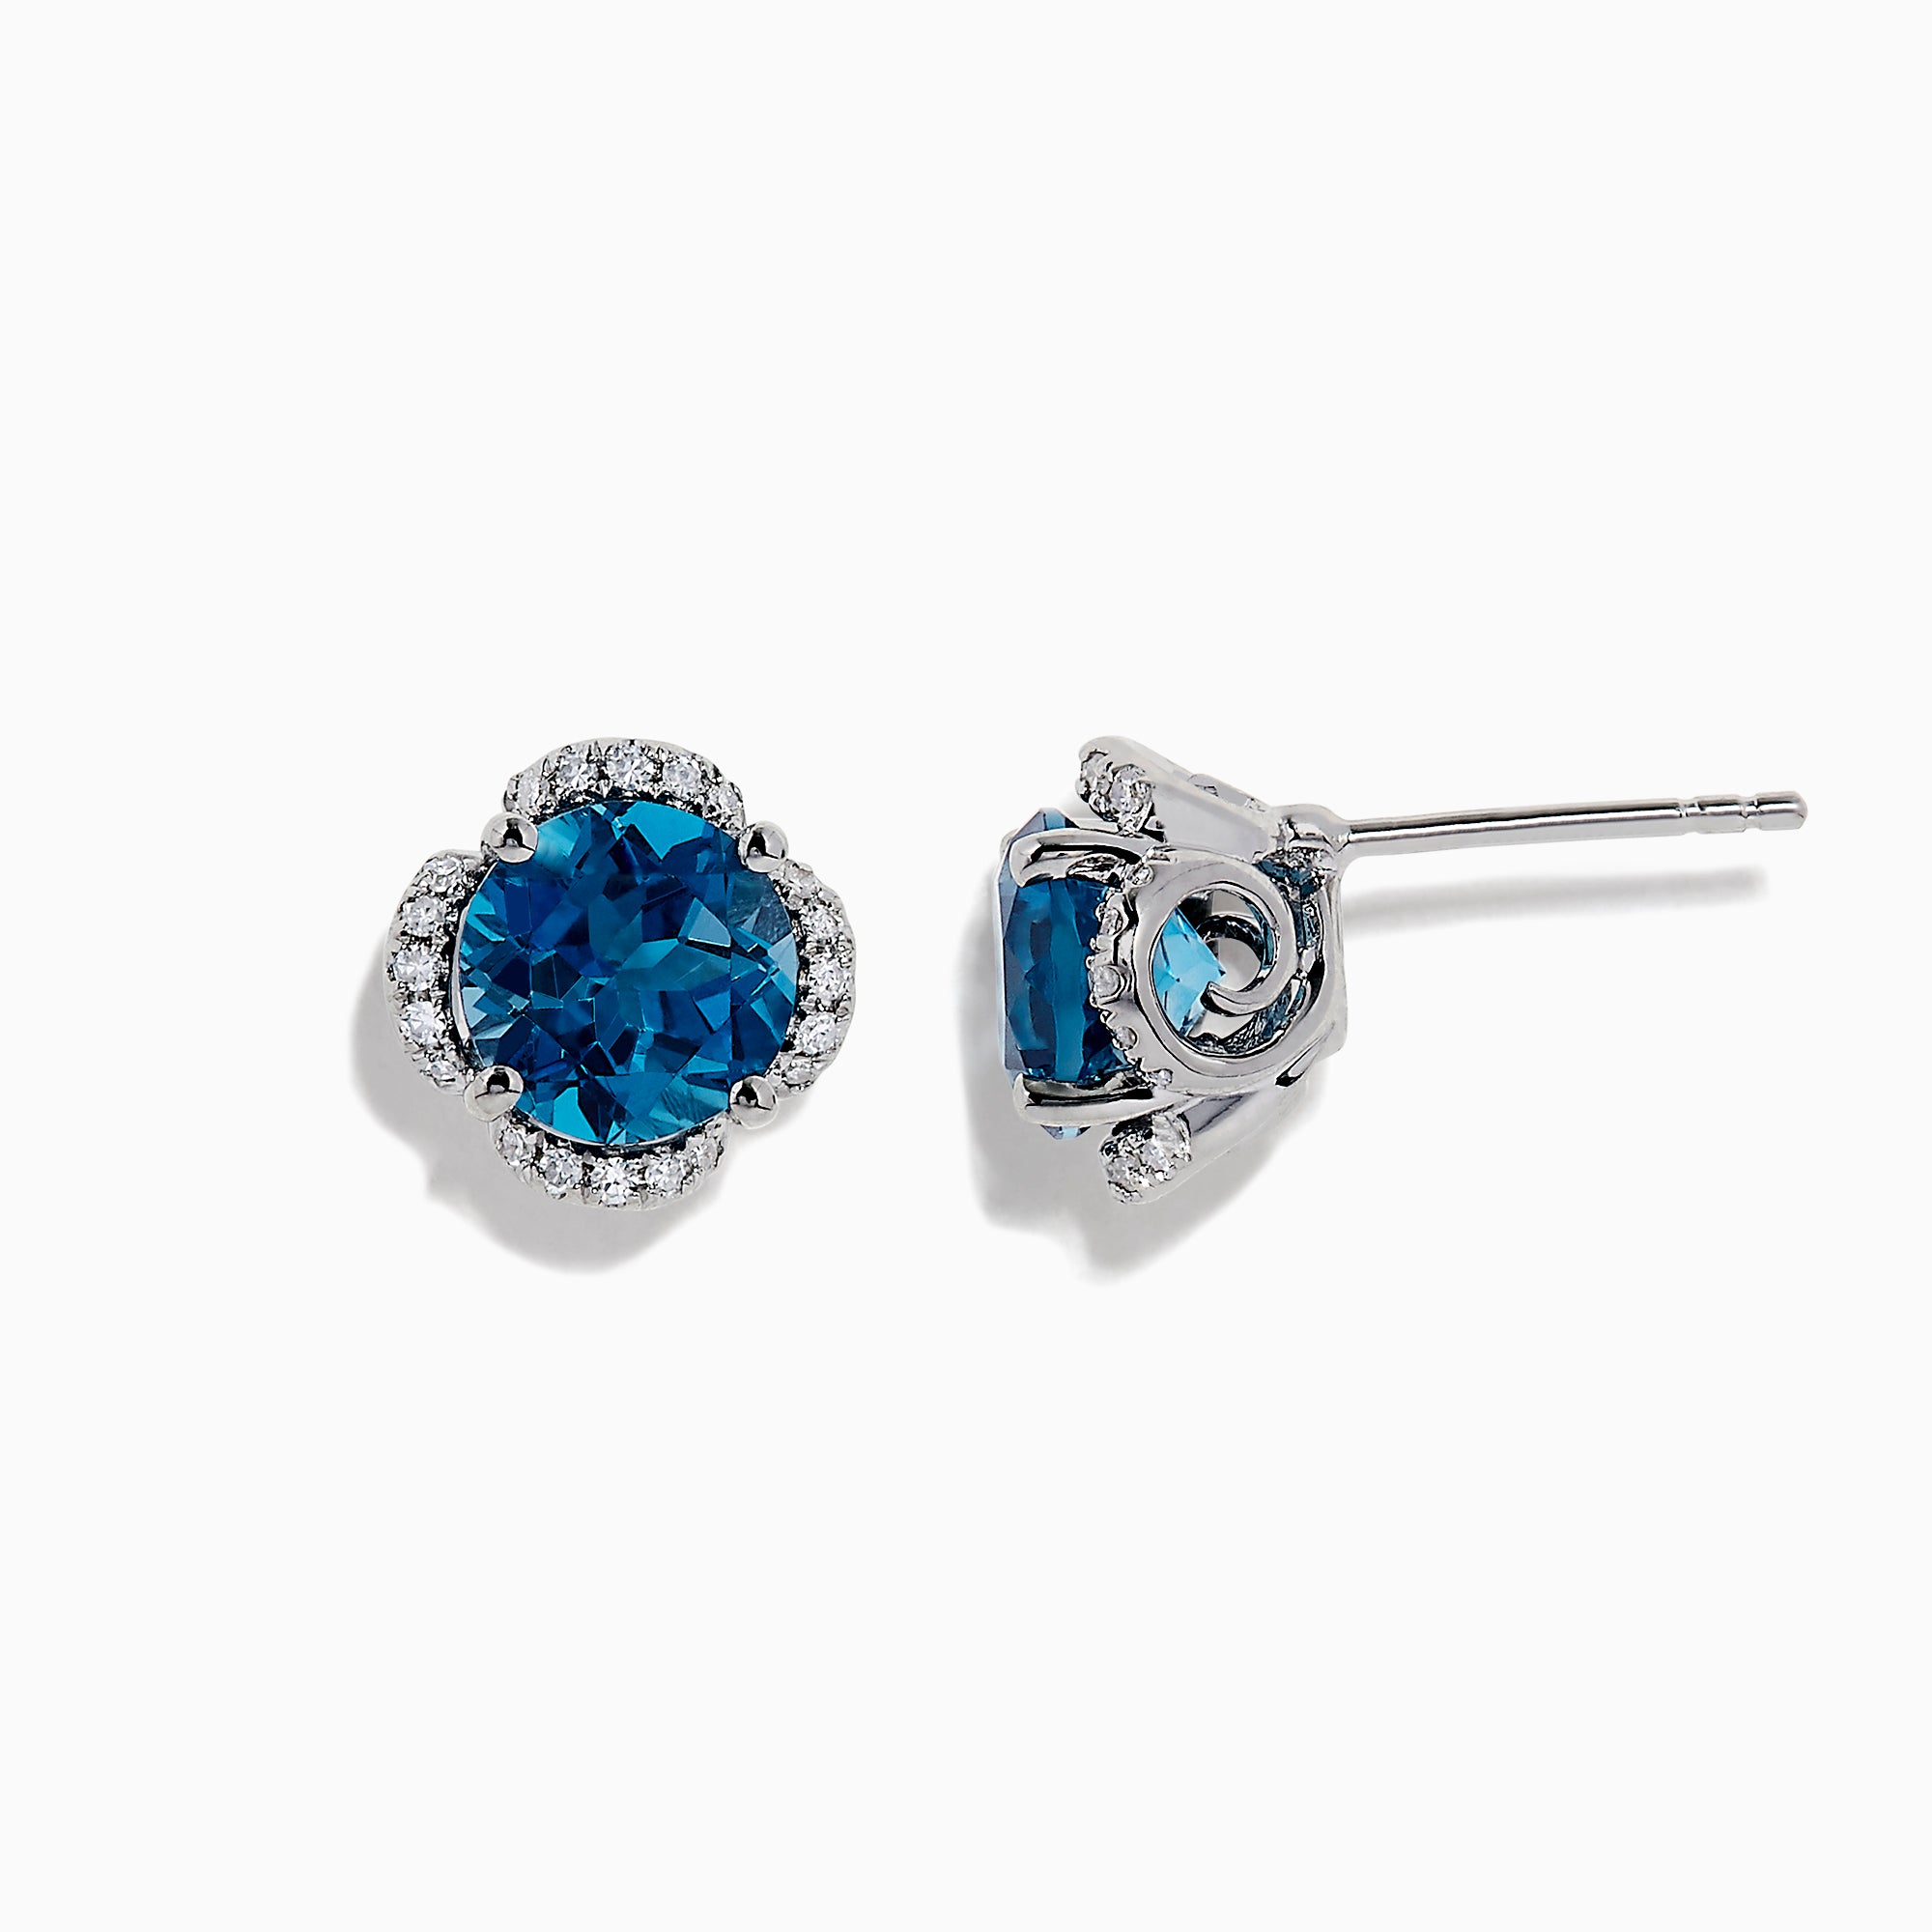 Effy Ocean Bleu 14K Gold London Blue Topaz and Diamond Earrings, 4.25 TCW